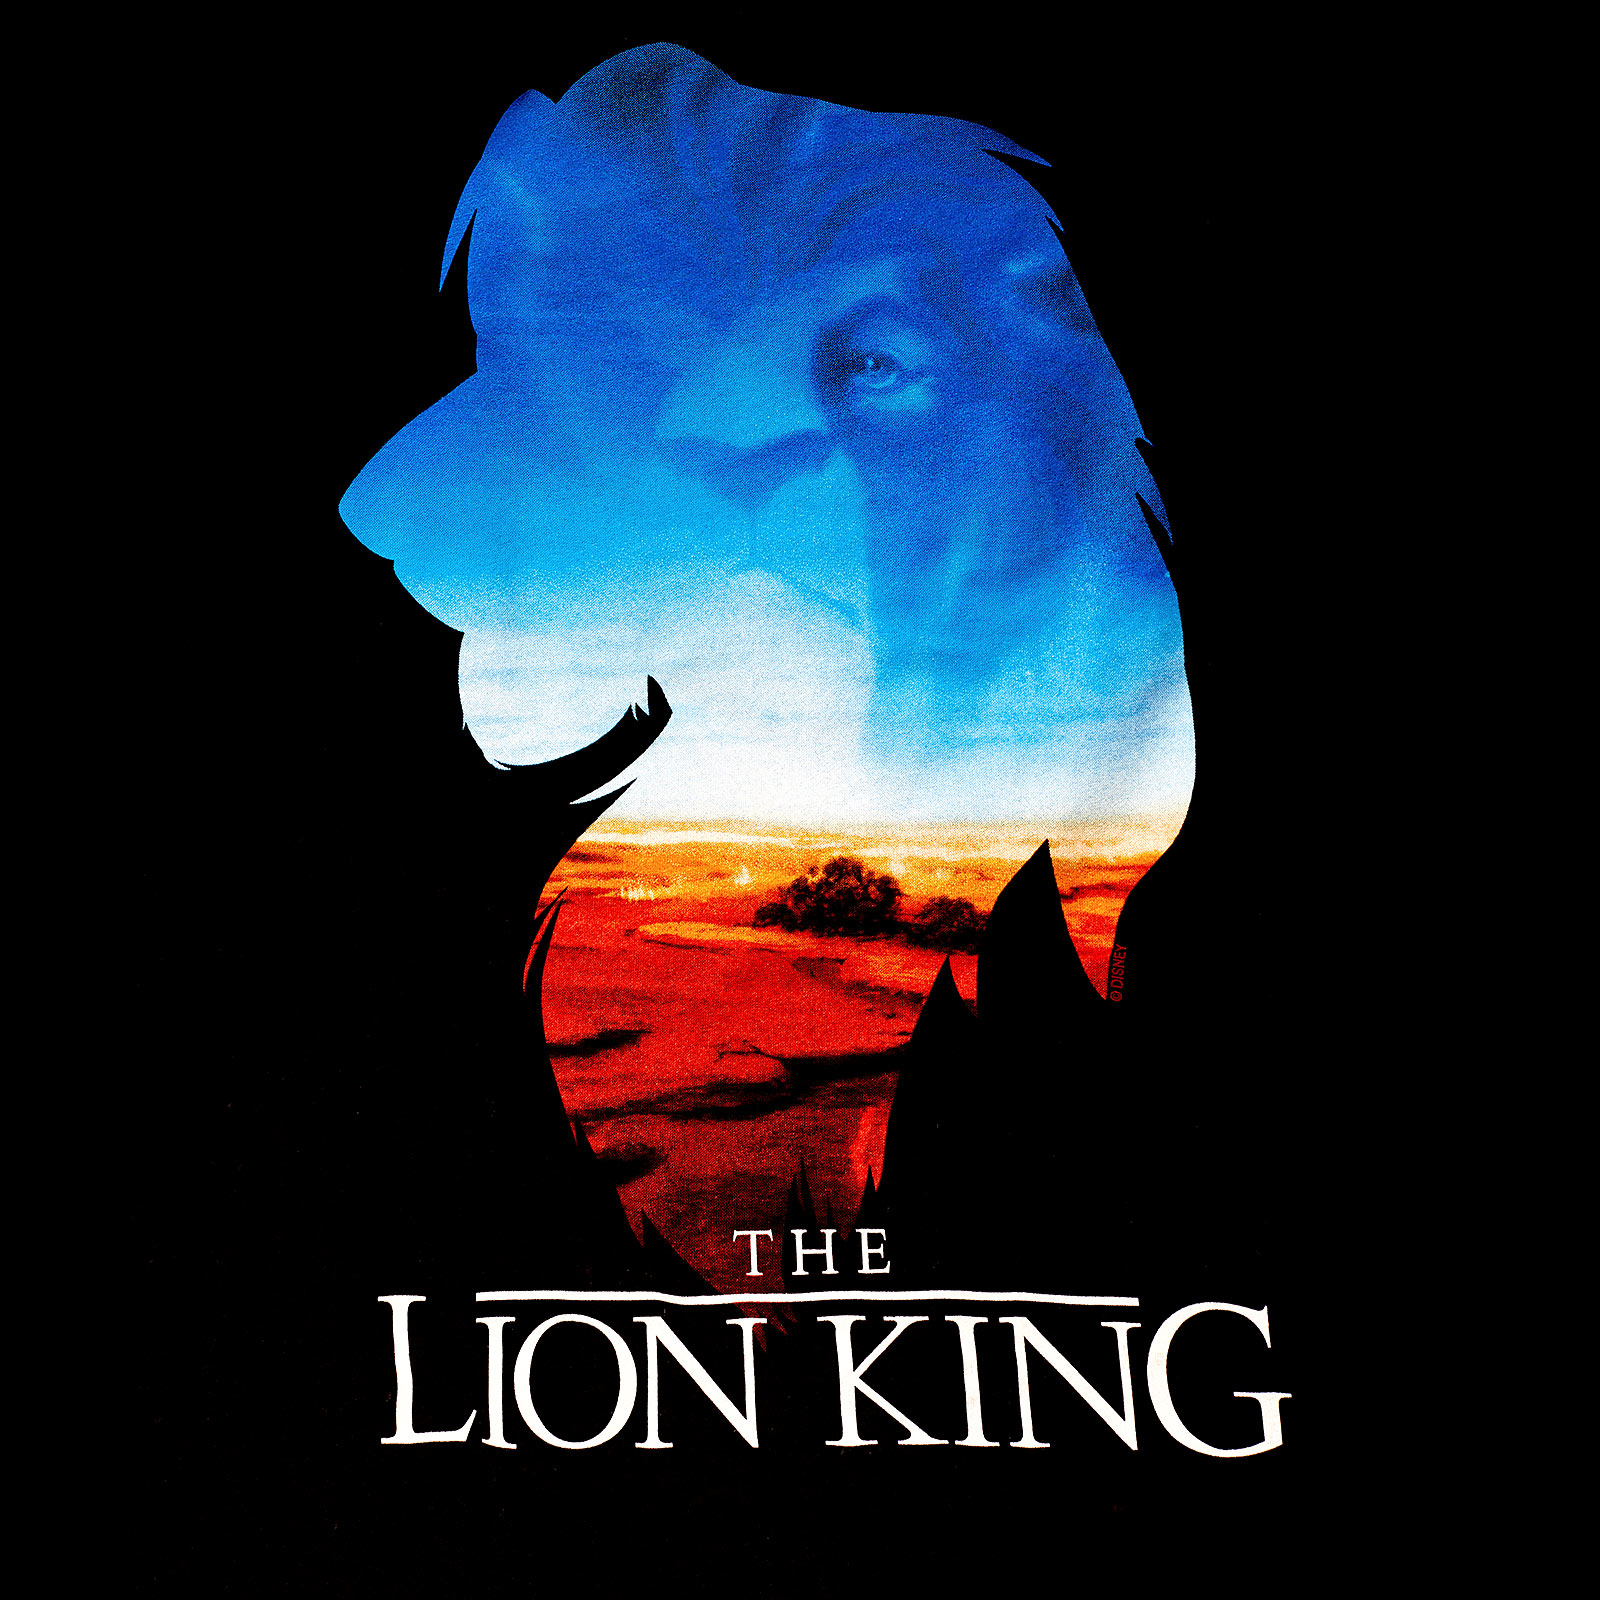 Lion King - Kings World dames loszittend T-shirt